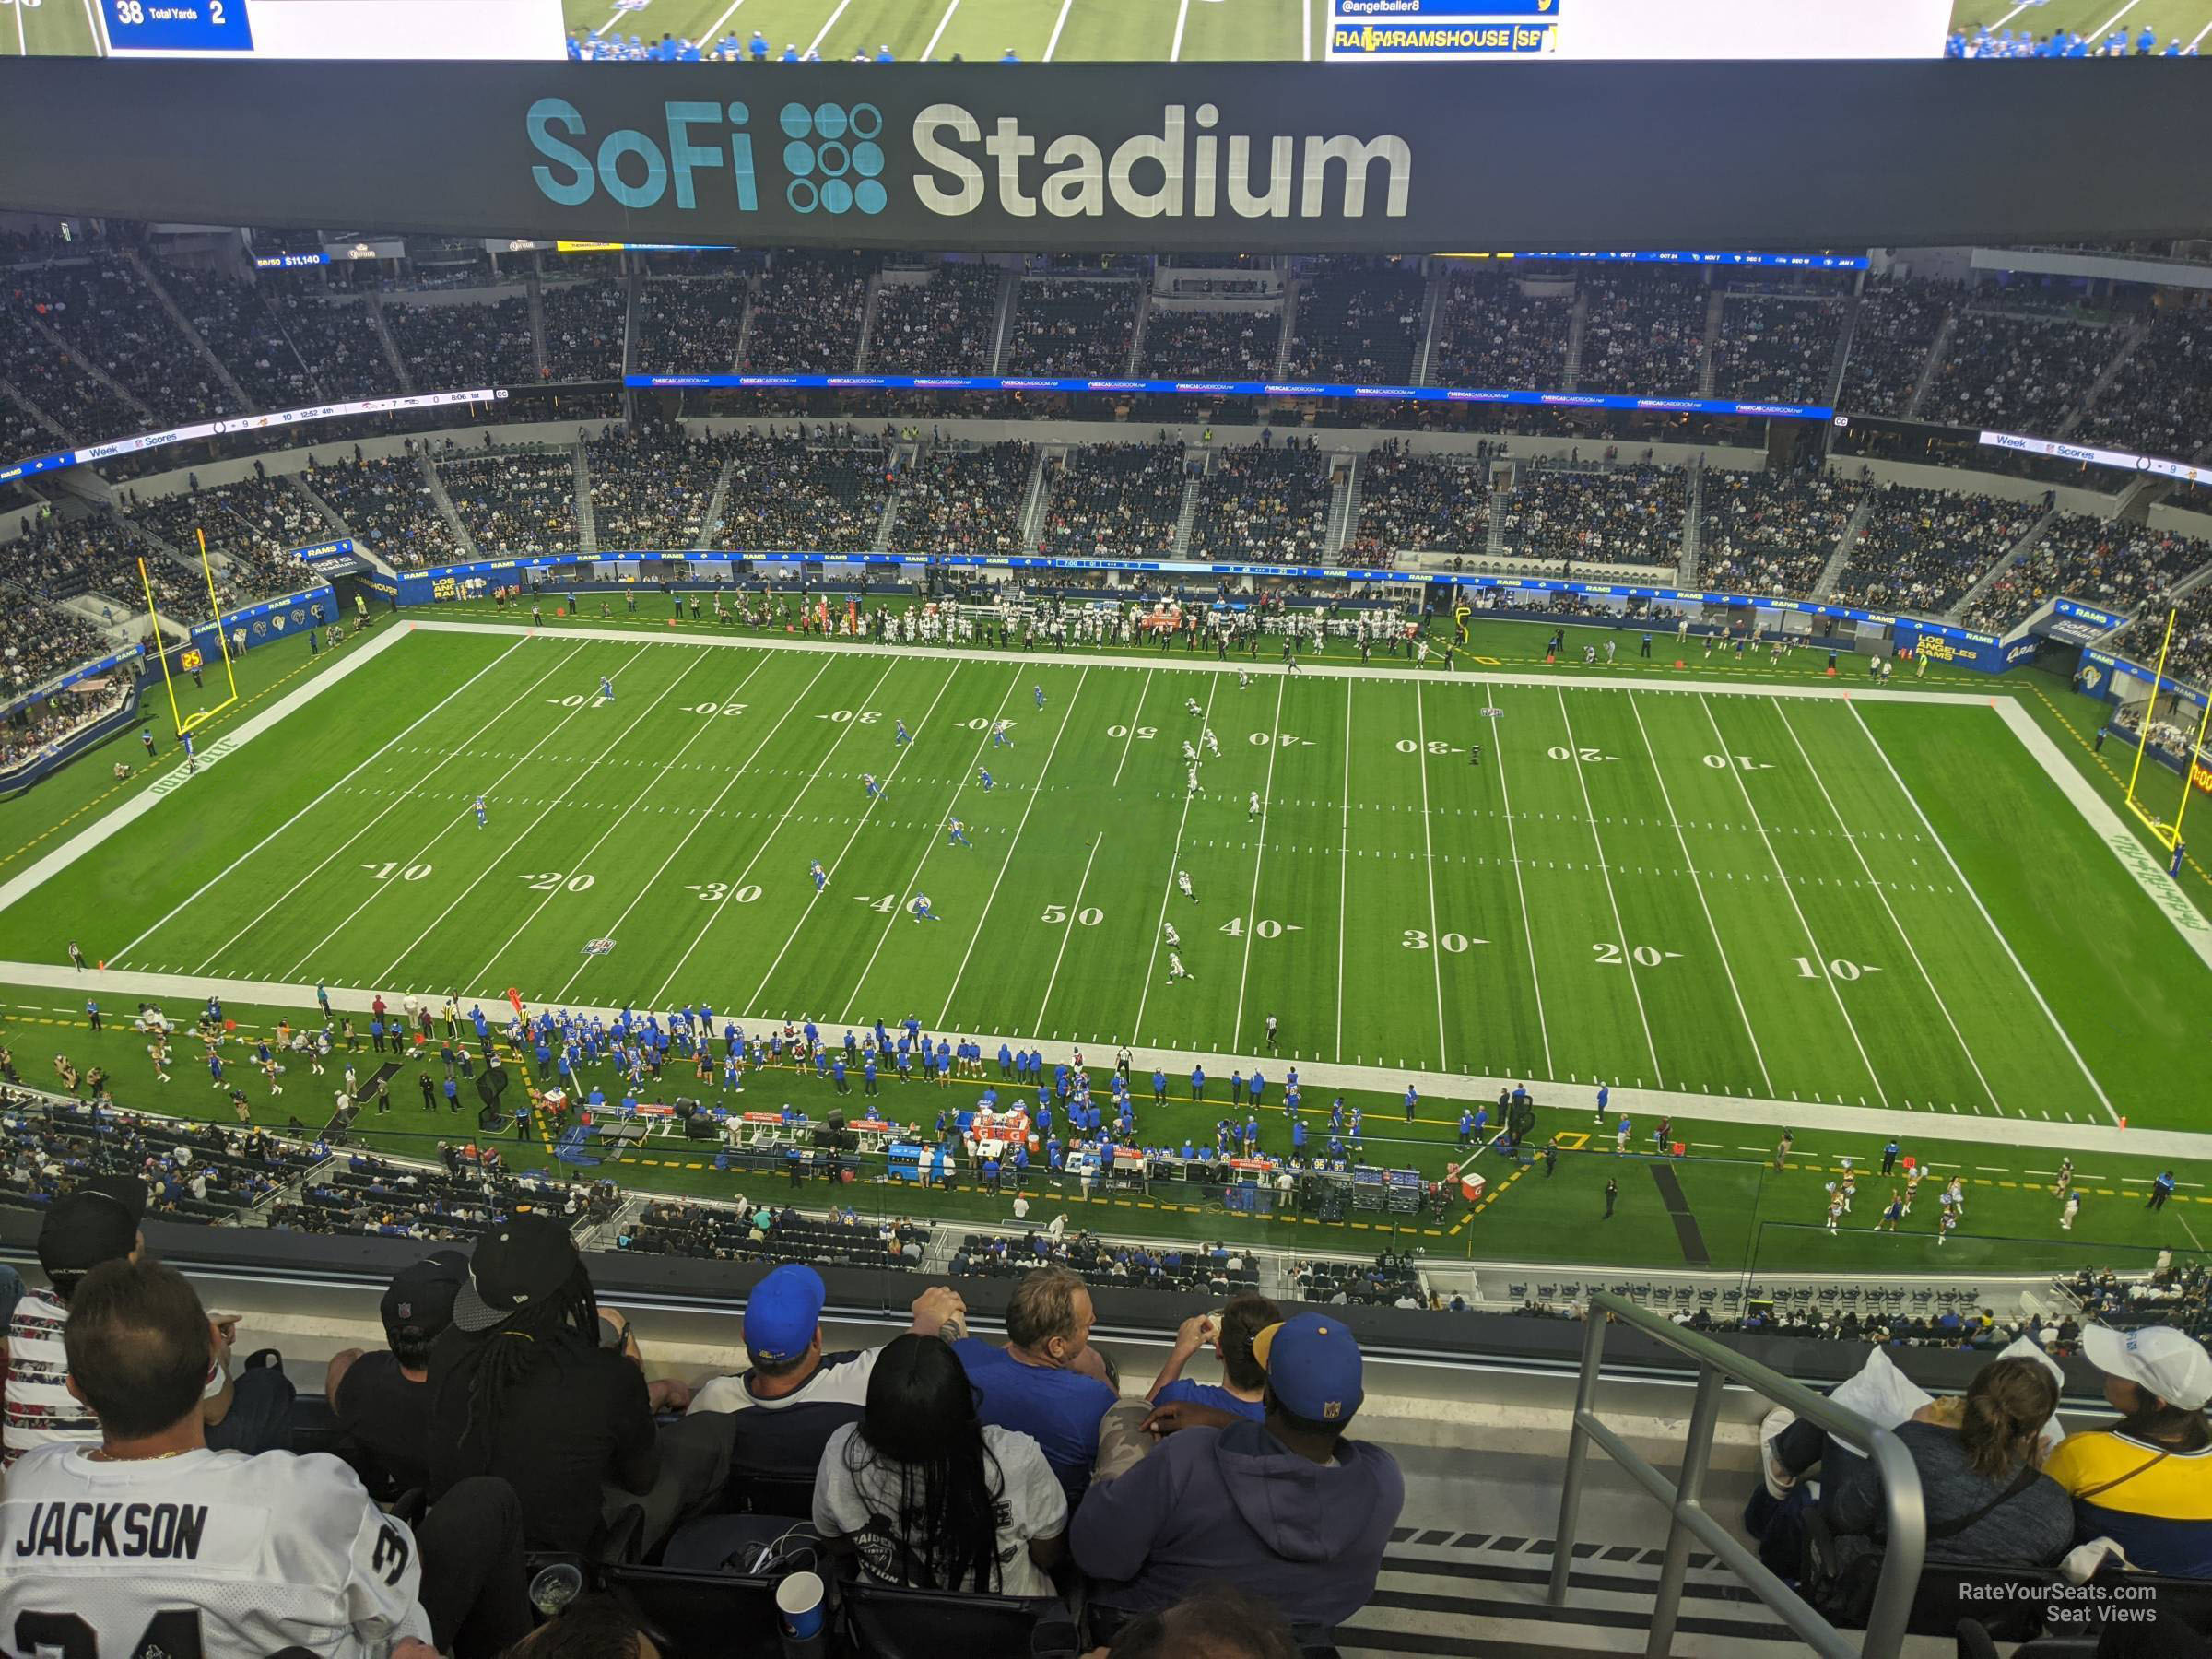 Section 444 at SoFi Stadium - RateYourSeats.com